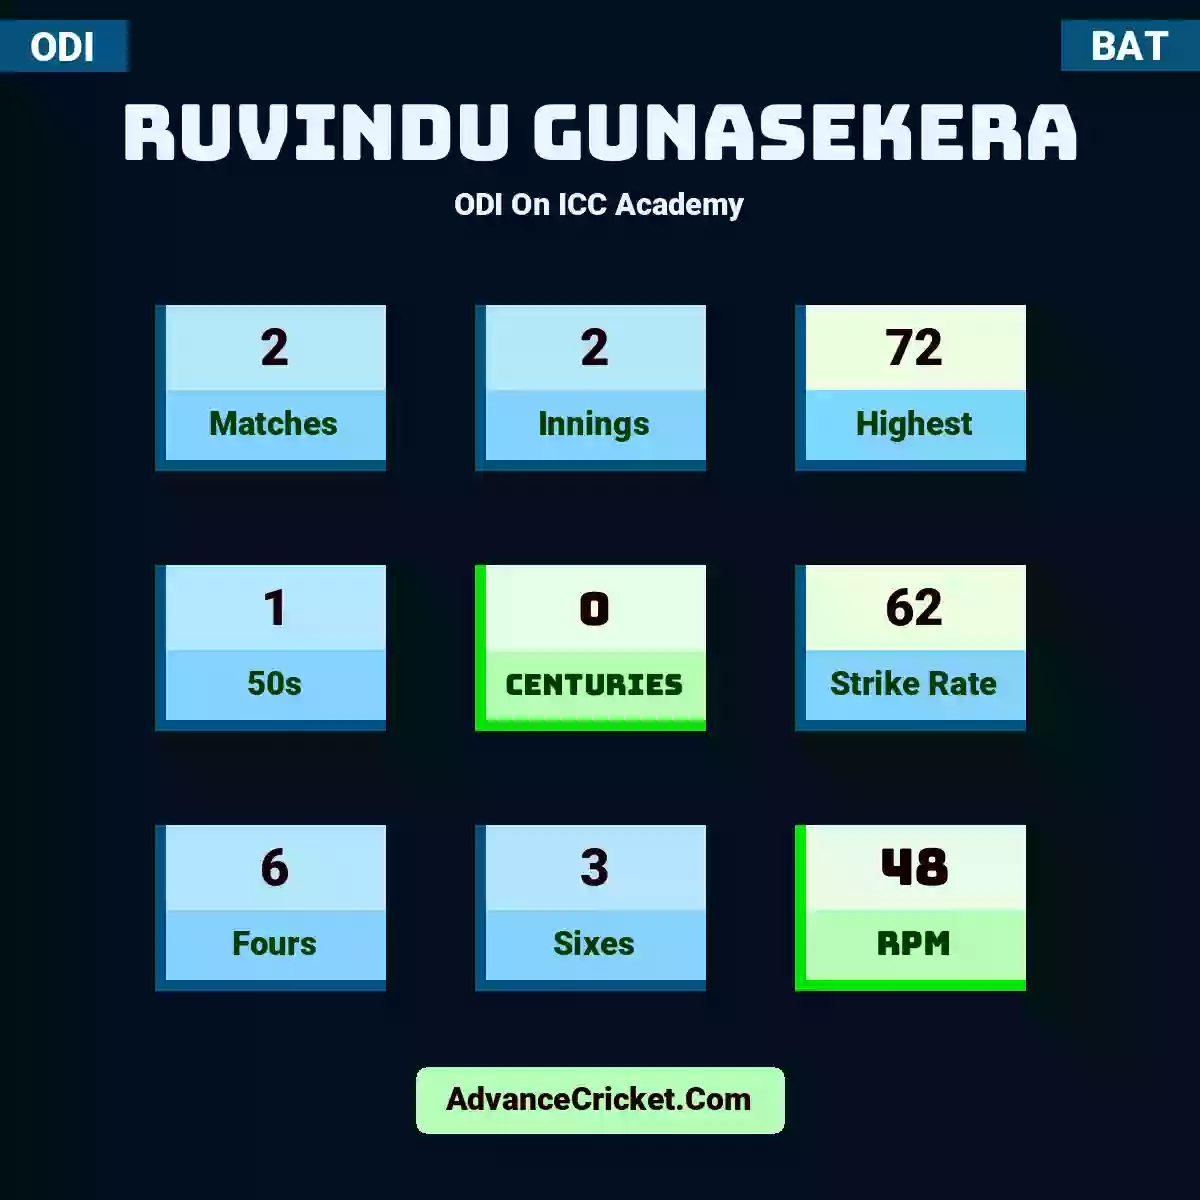 Ruvindu Gunasekera ODI  On ICC Academy, Ruvindu Gunasekera played 2 matches, scored 72 runs as highest, 1 half-centuries, and 0 centuries, with a strike rate of 62. R.Gunasekera hit 6 fours and 3 sixes, with an RPM of 48.